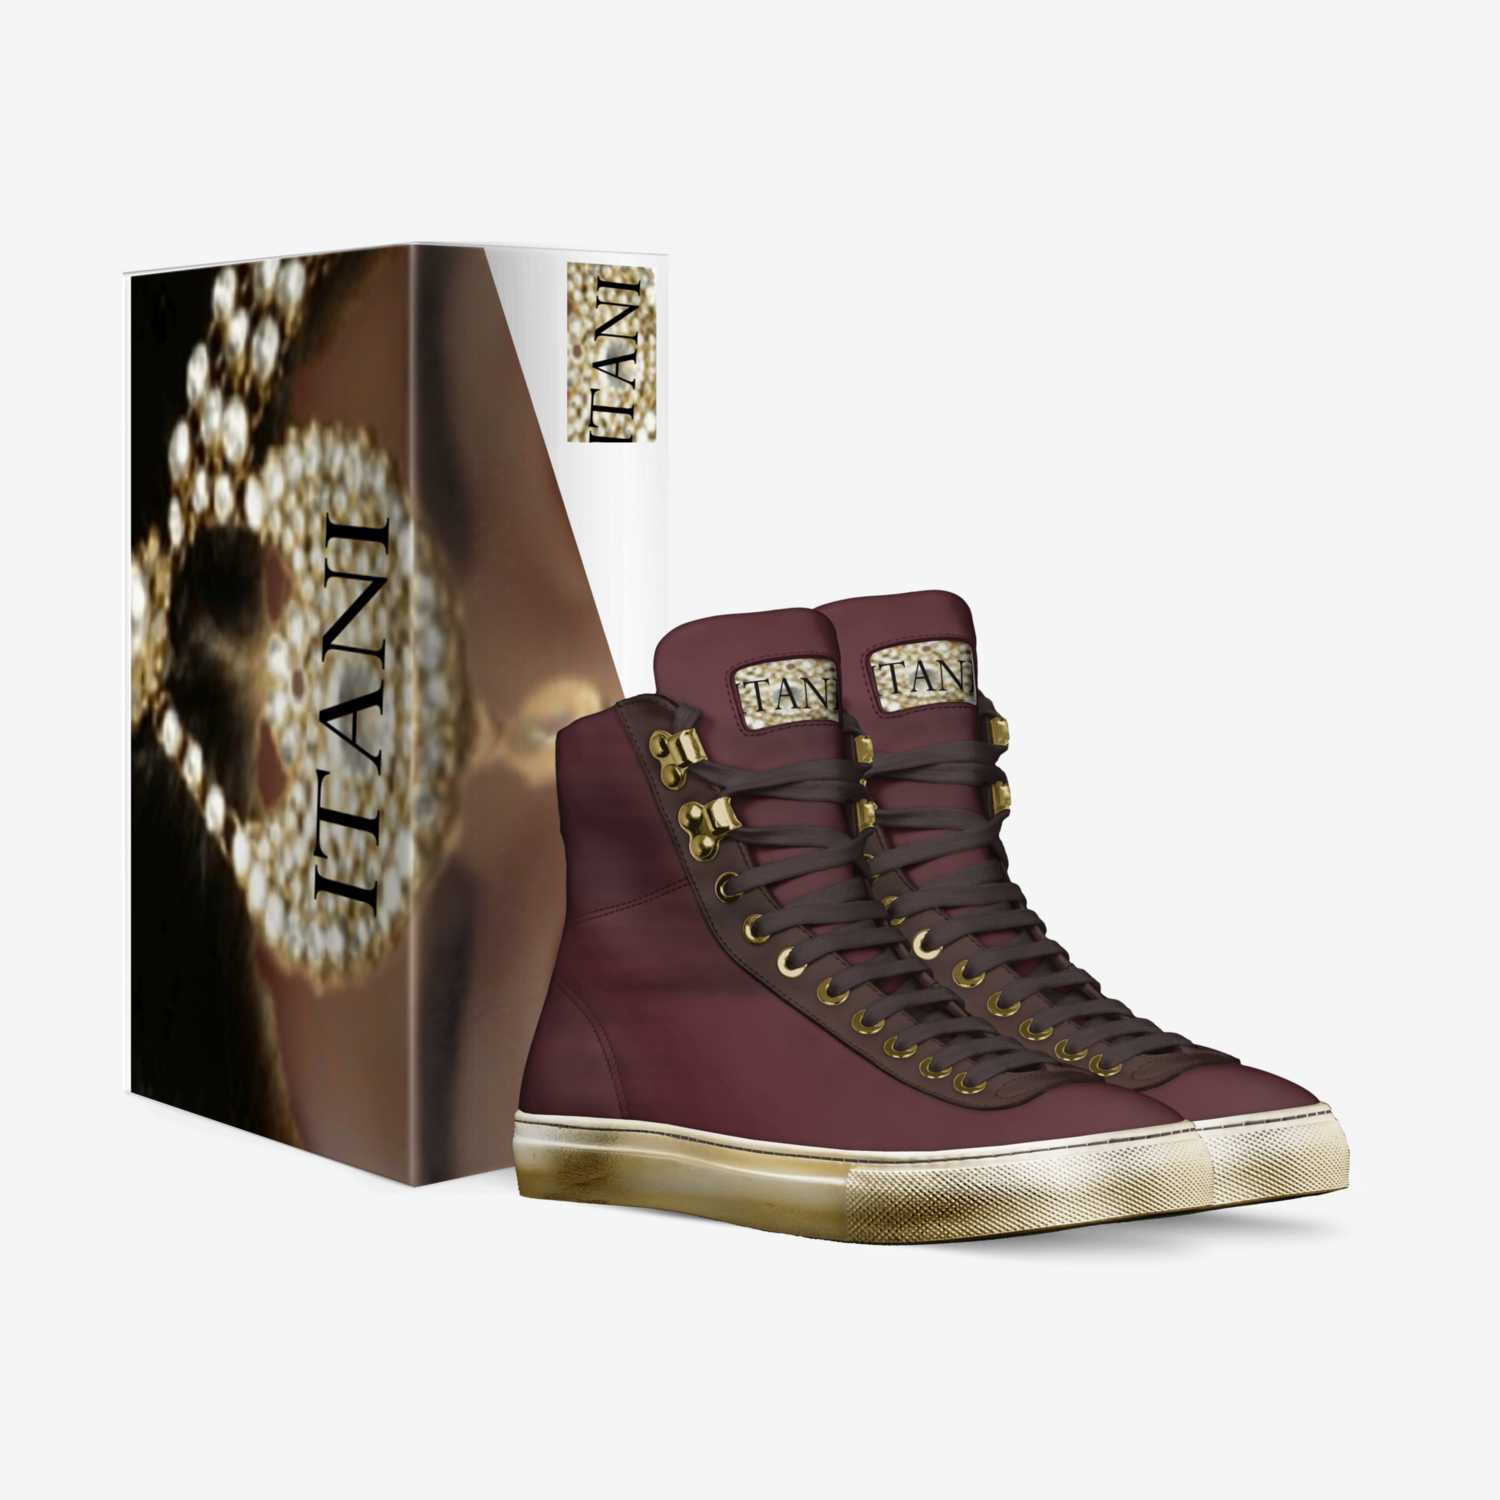 ITANI custom made in Italy shoes by Amanda J. Itani | Box view